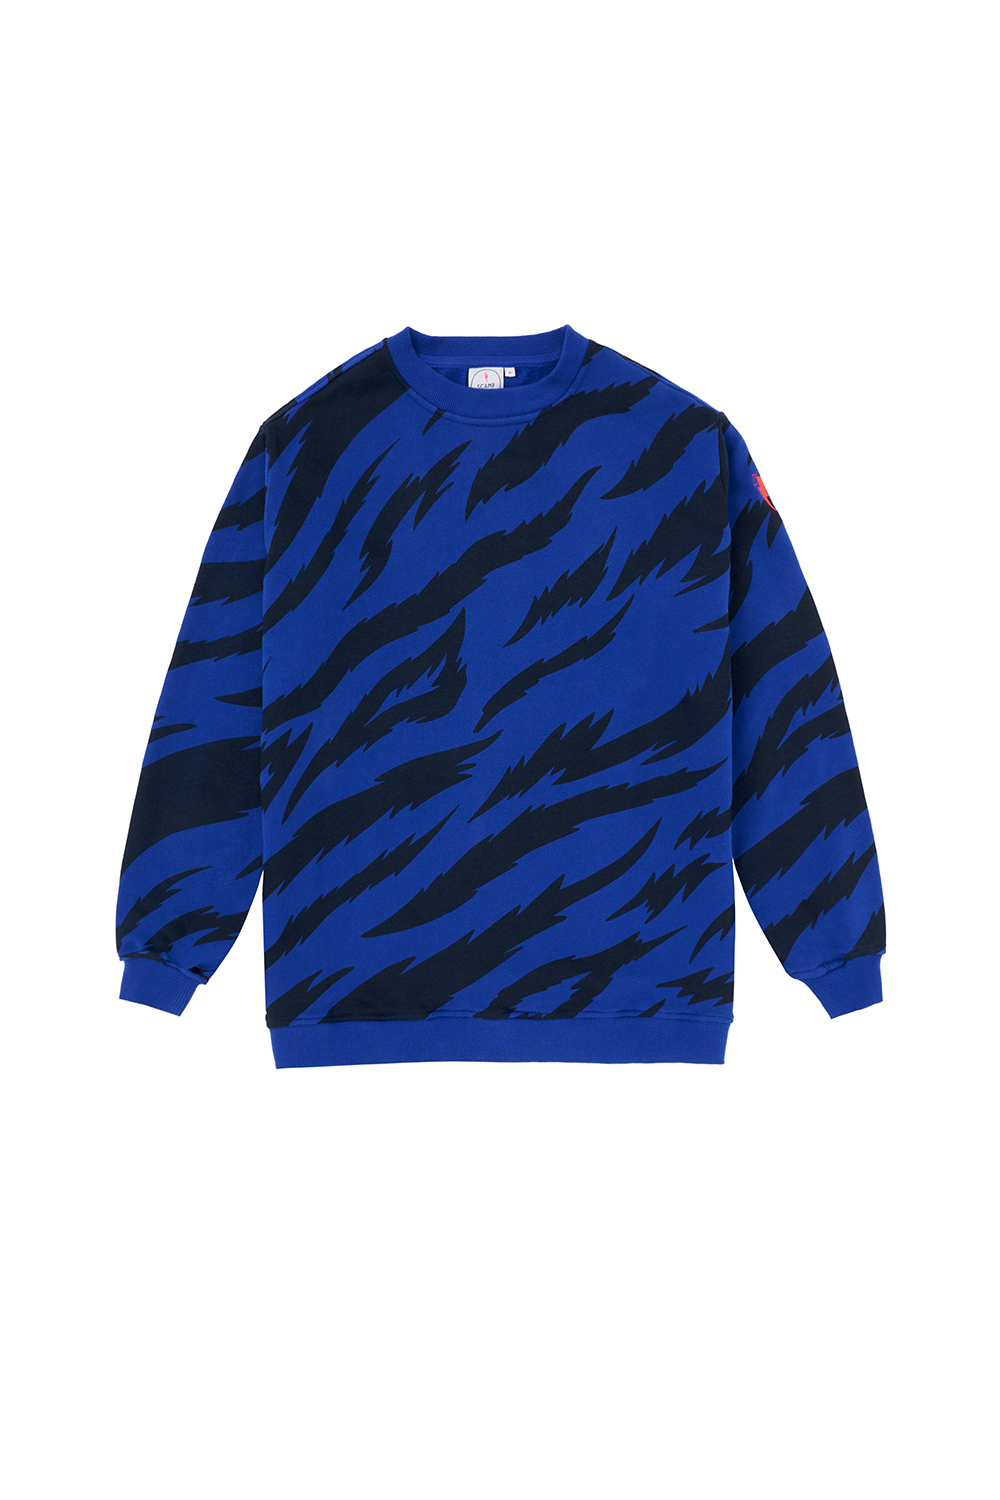 Blue with Black Graphic Tiger Oversized Sweatshirt